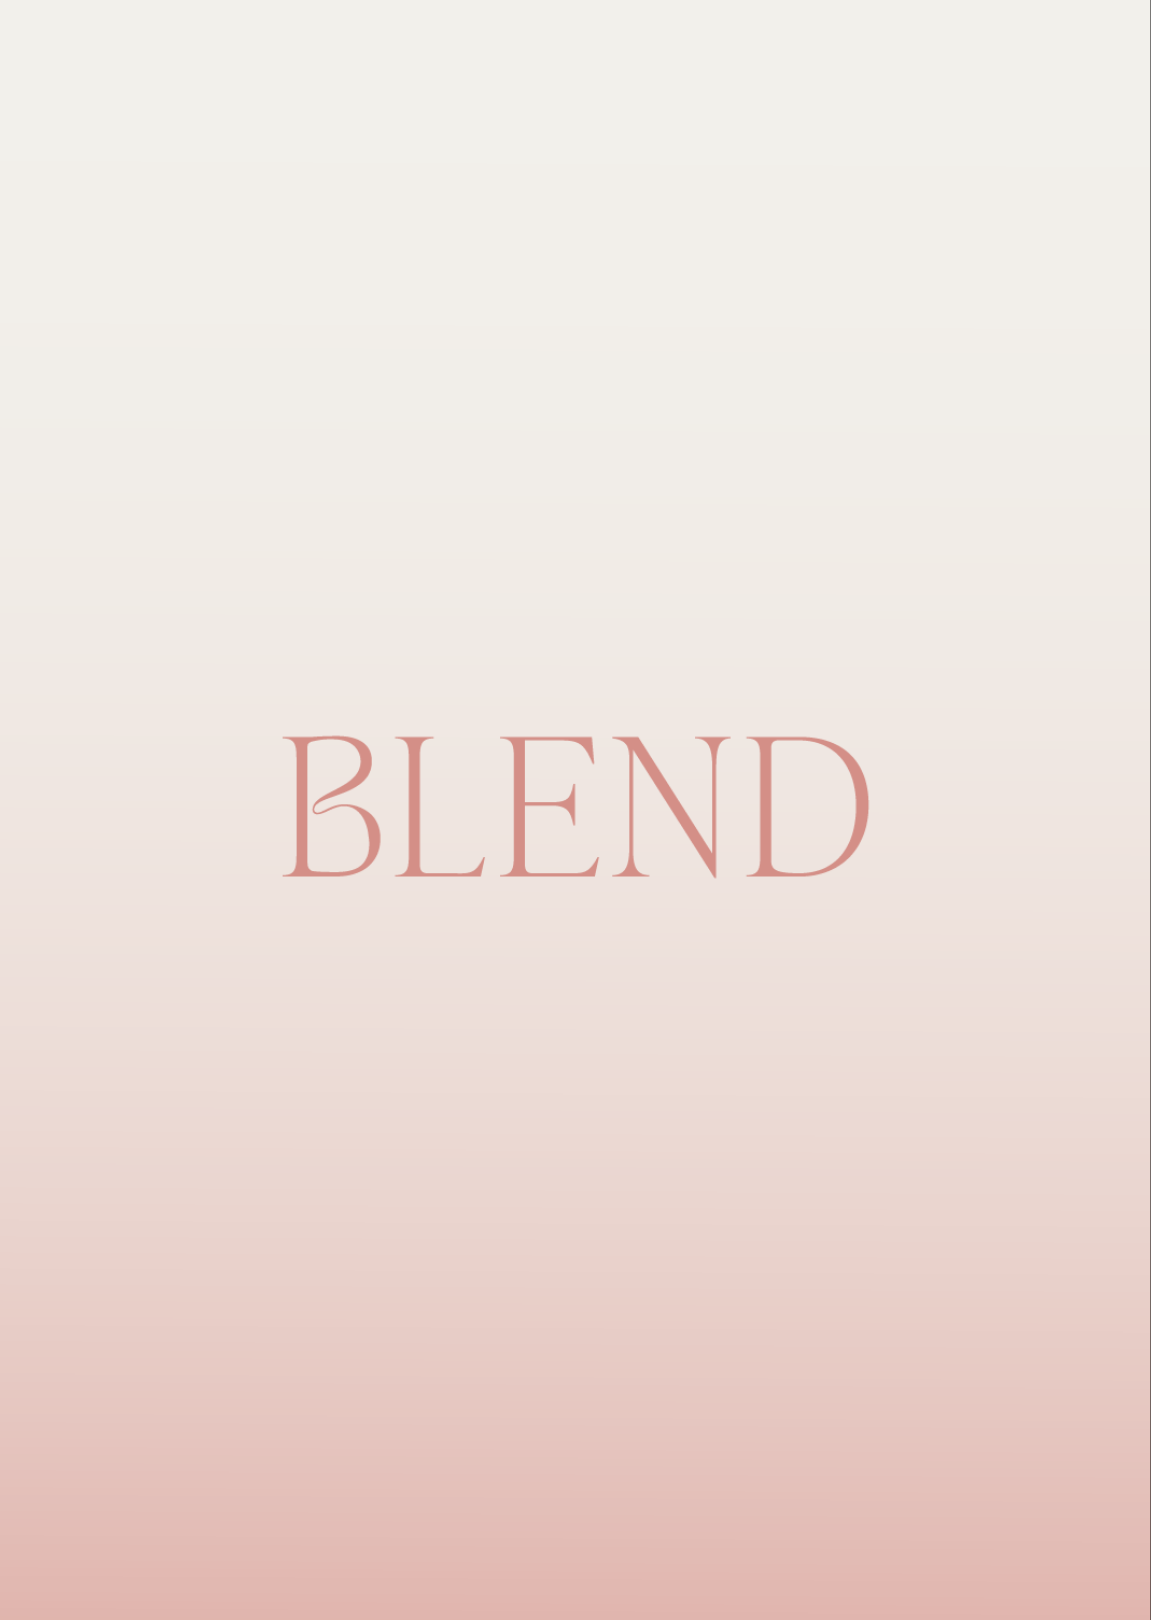 Blend website – 1